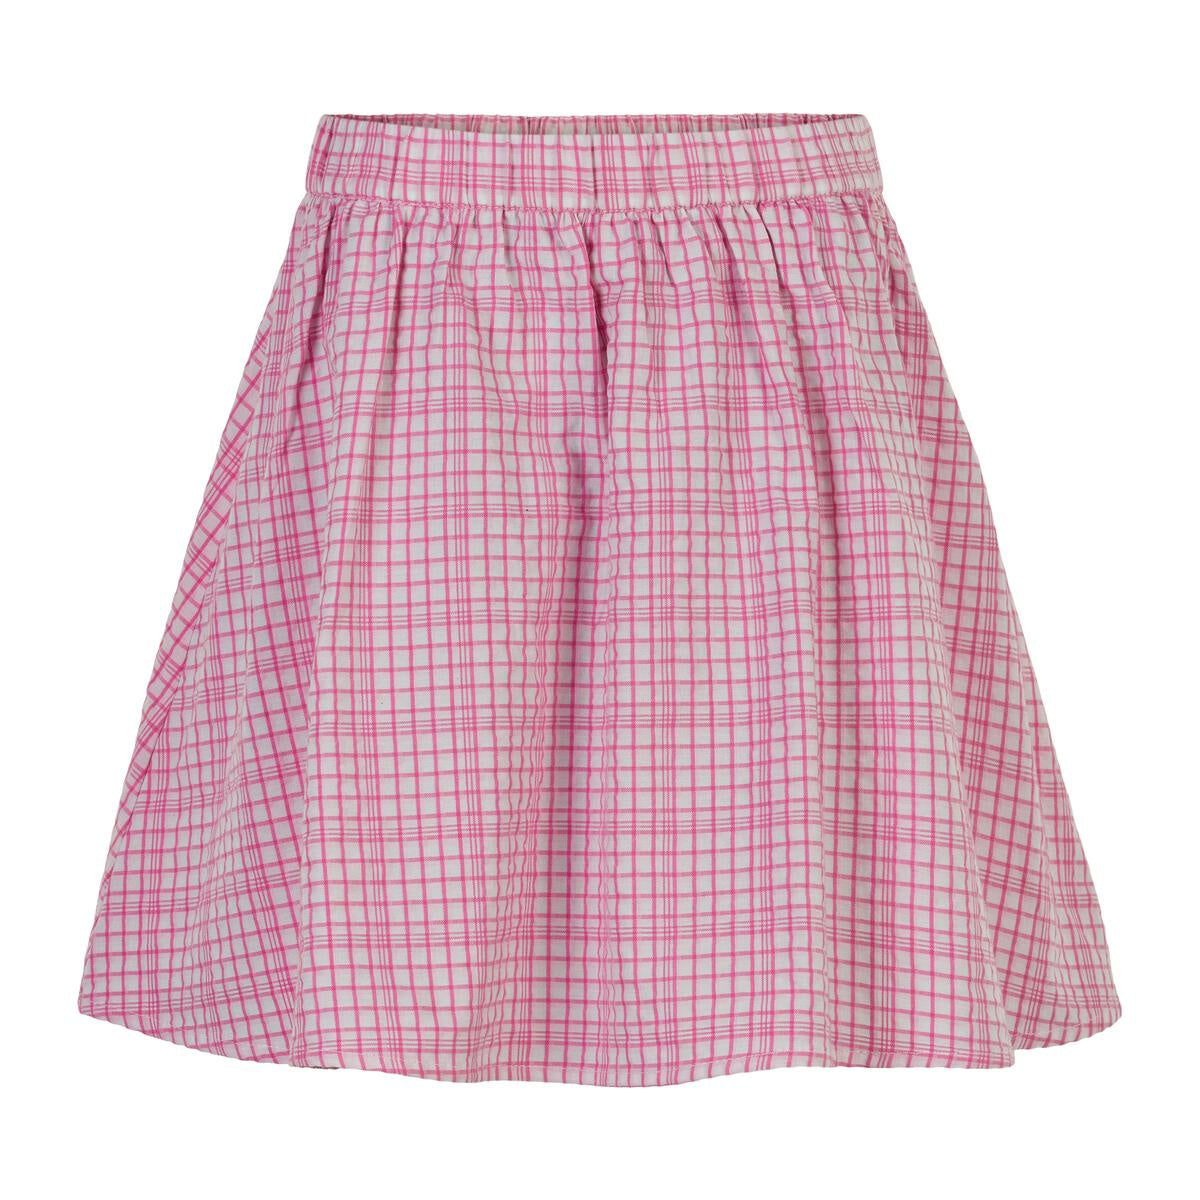 Creamie Chateau Rose Skirt Checks 821883